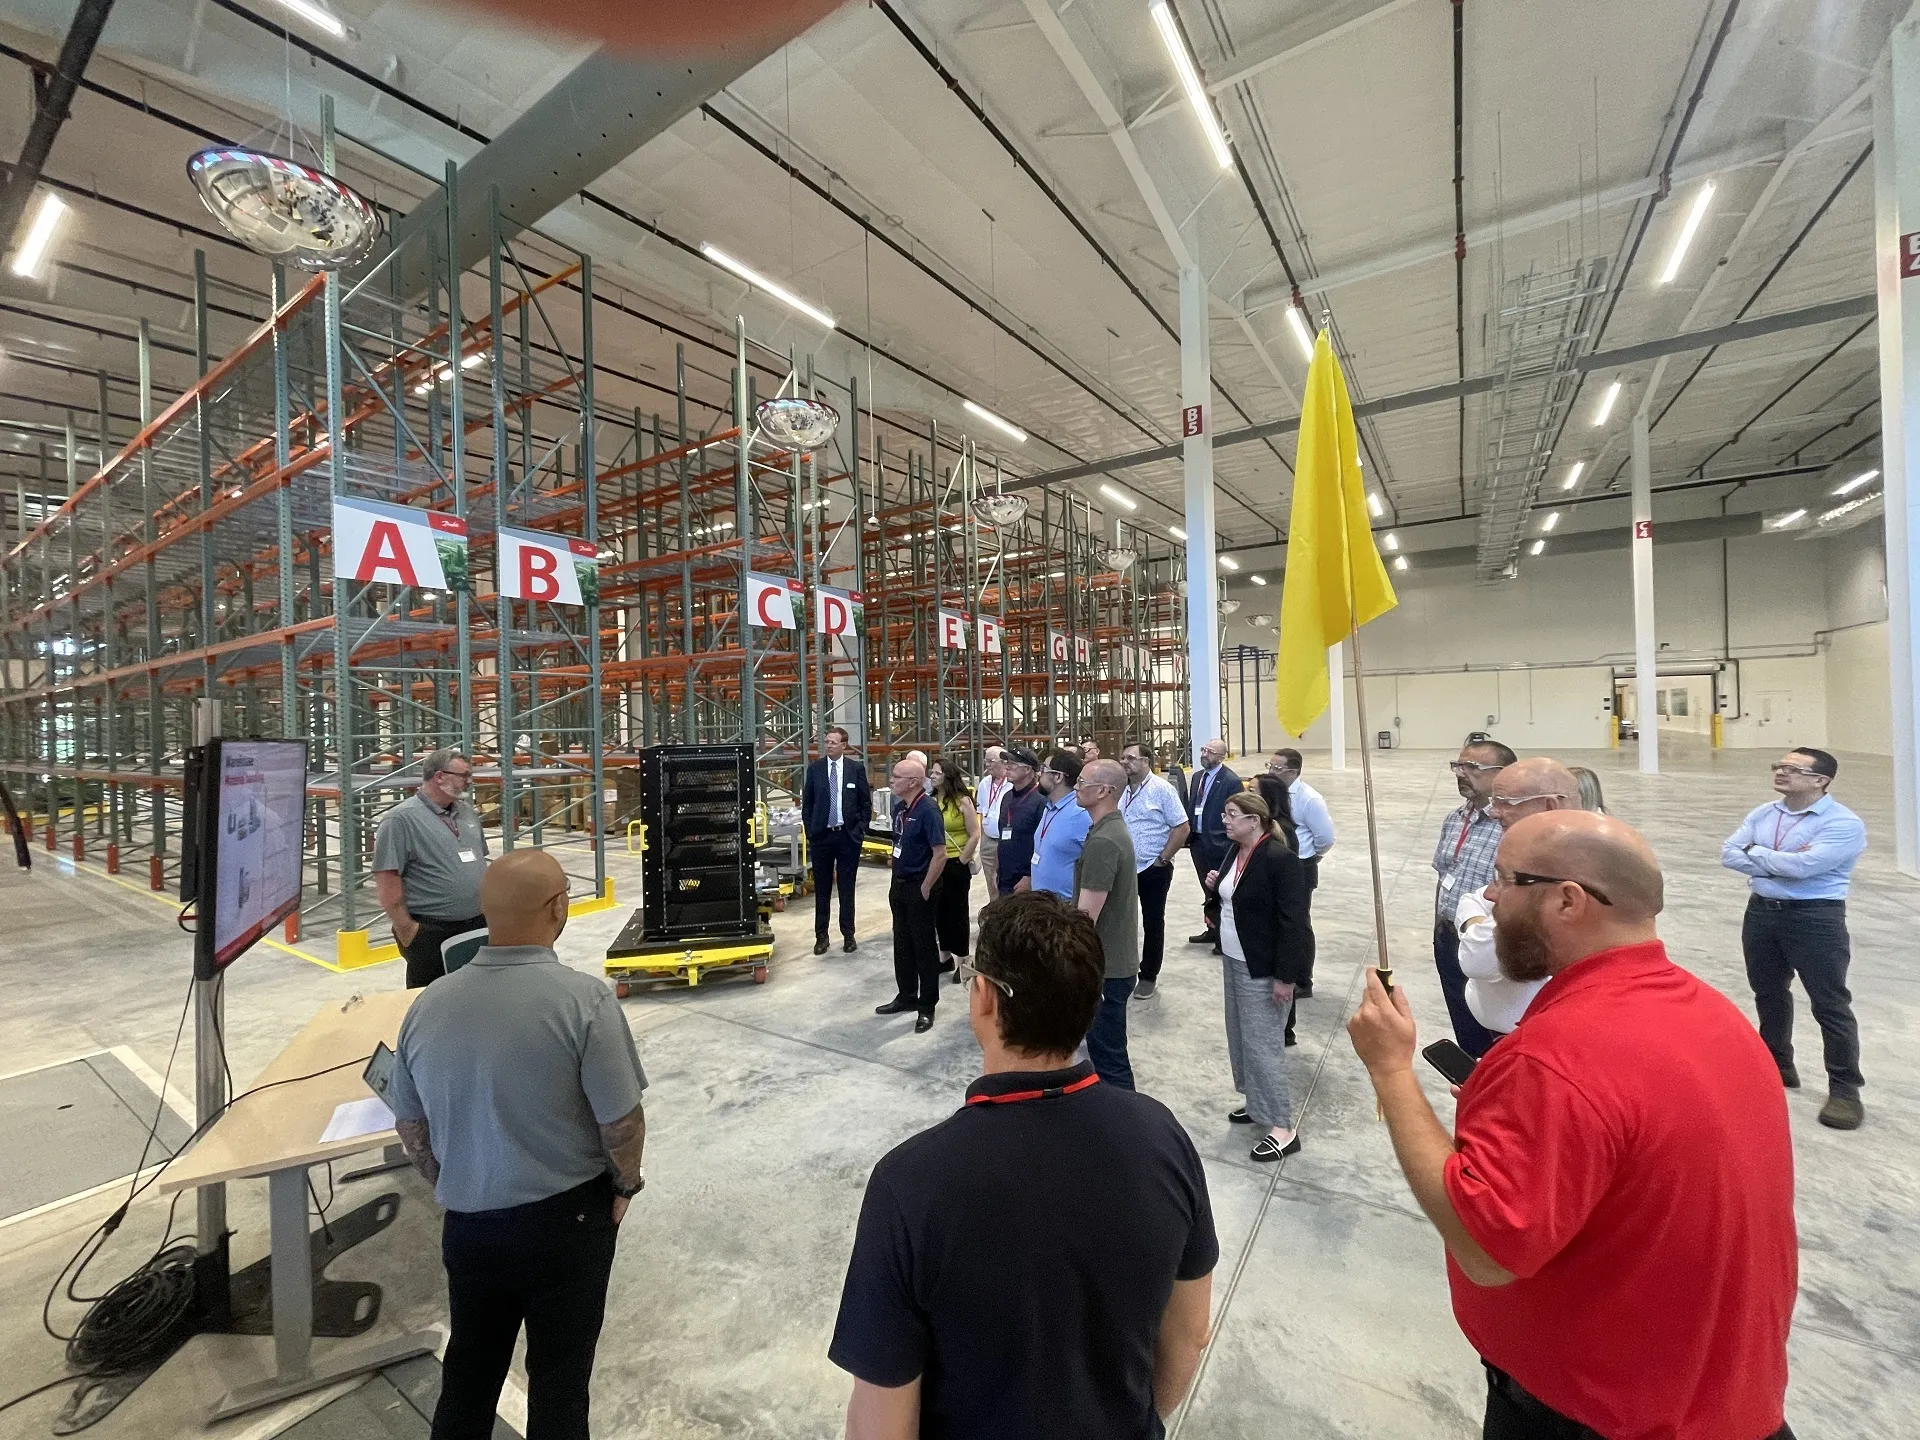 Danfoss Opens New Turbocor Factory in Tallahassee, Florida